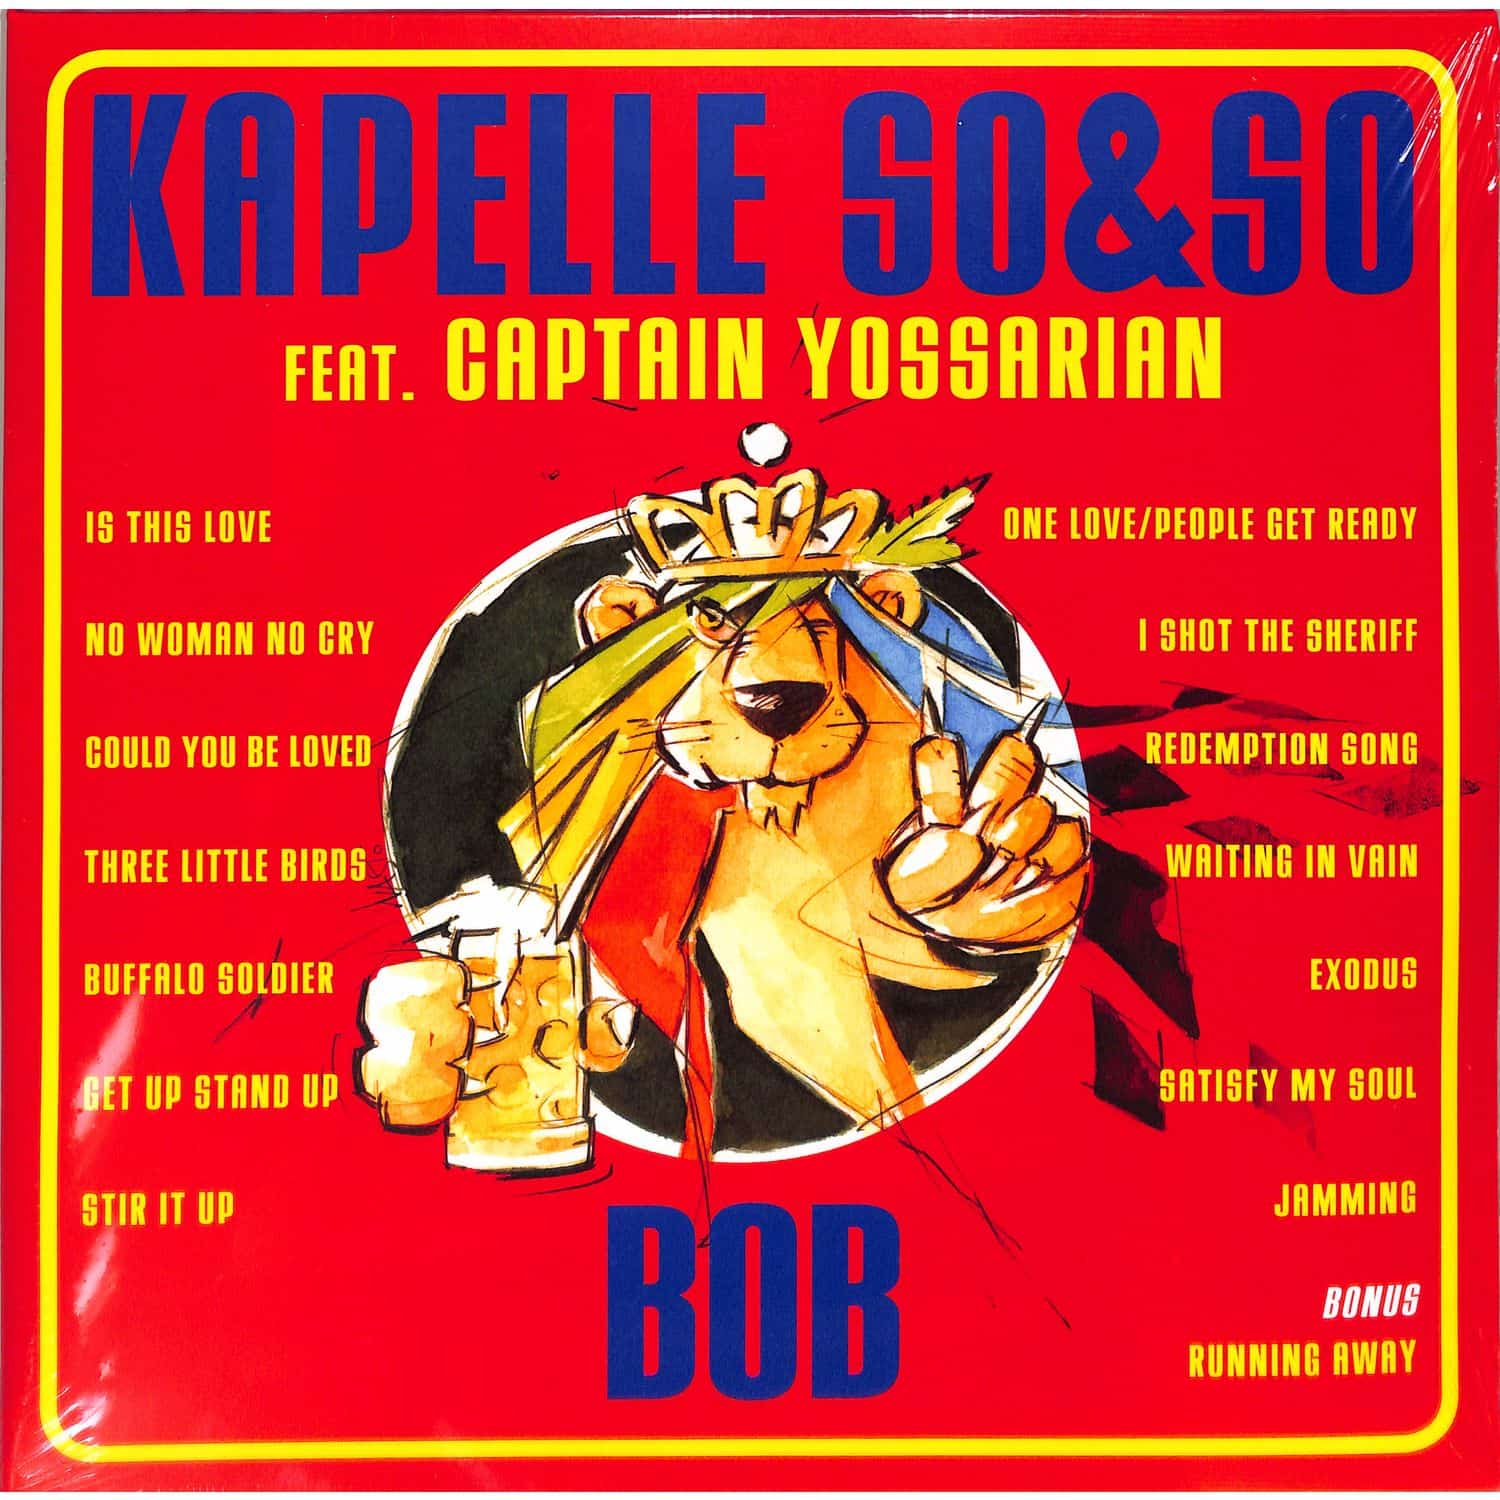 Kapelle So&So ft. Captain Yossarian - BOB 